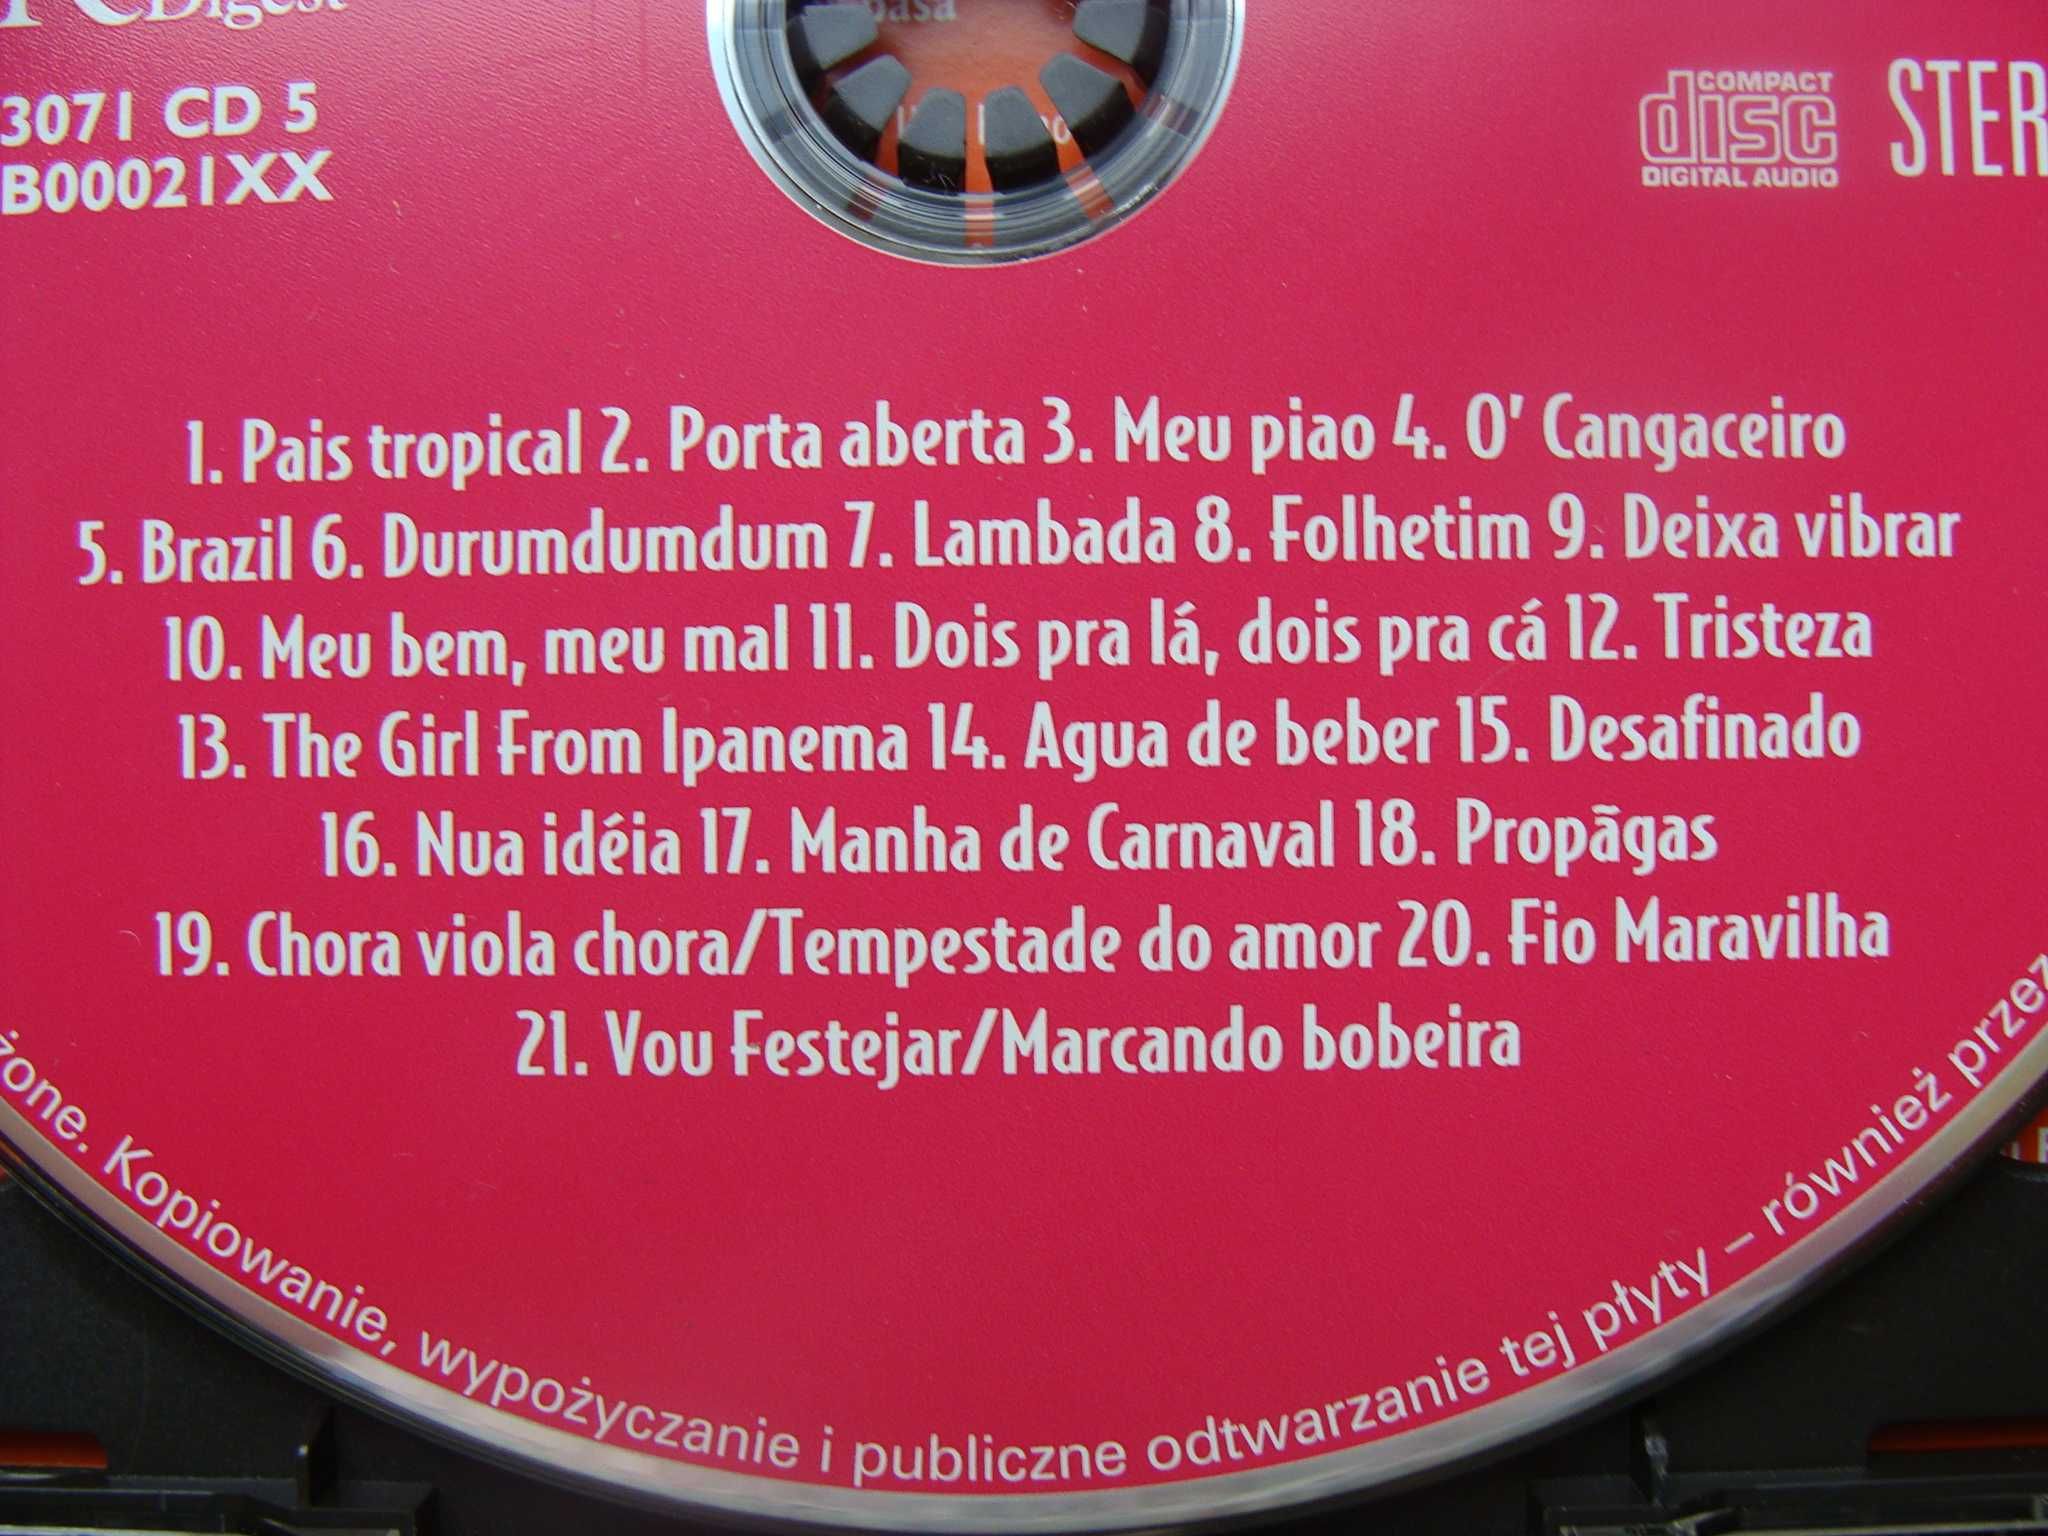 Zestaw płyt 5 CD "Fiesta" Reader's Digest (M)